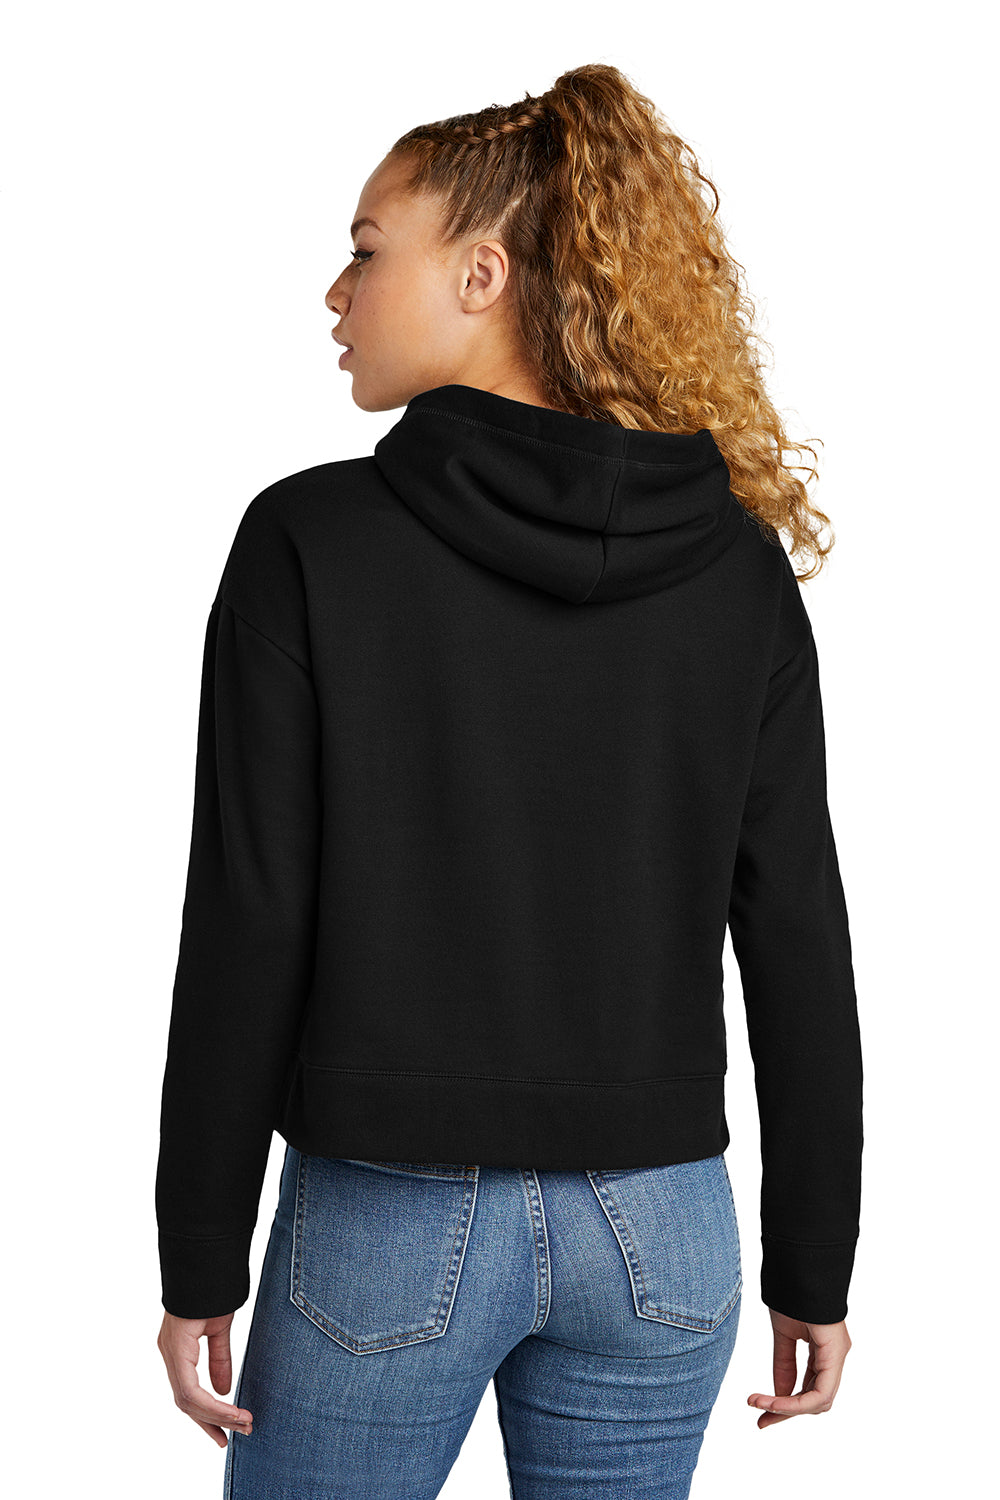 New Era LNEA550 Womens Comeback Fleece Hooded Sweatshirt Hoodie Black Back